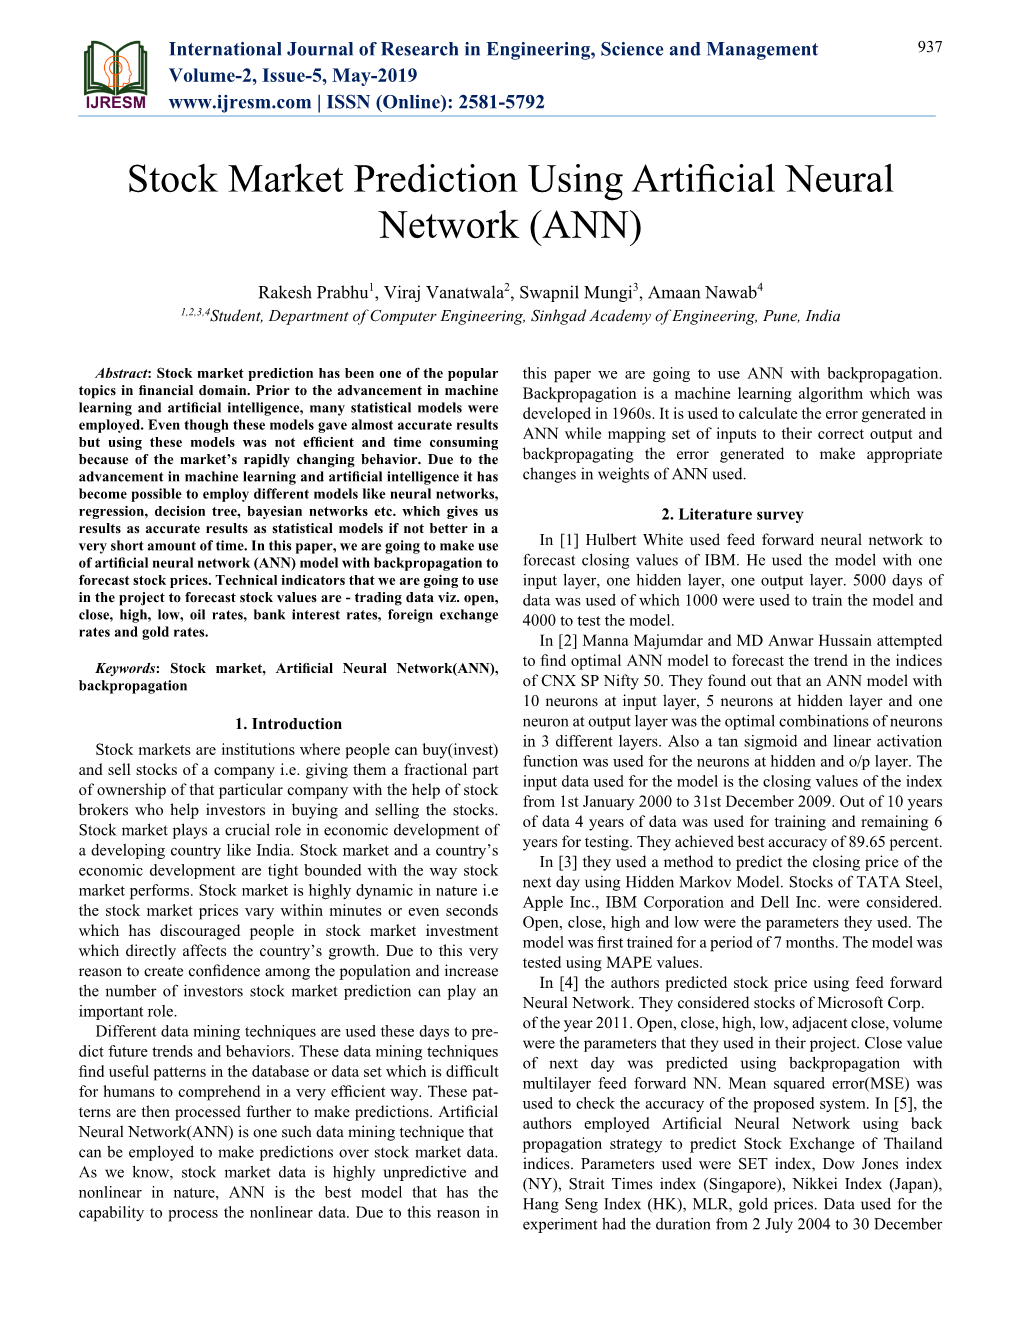 Stock Market Prediction Using Artificial Neural Network (ANN)